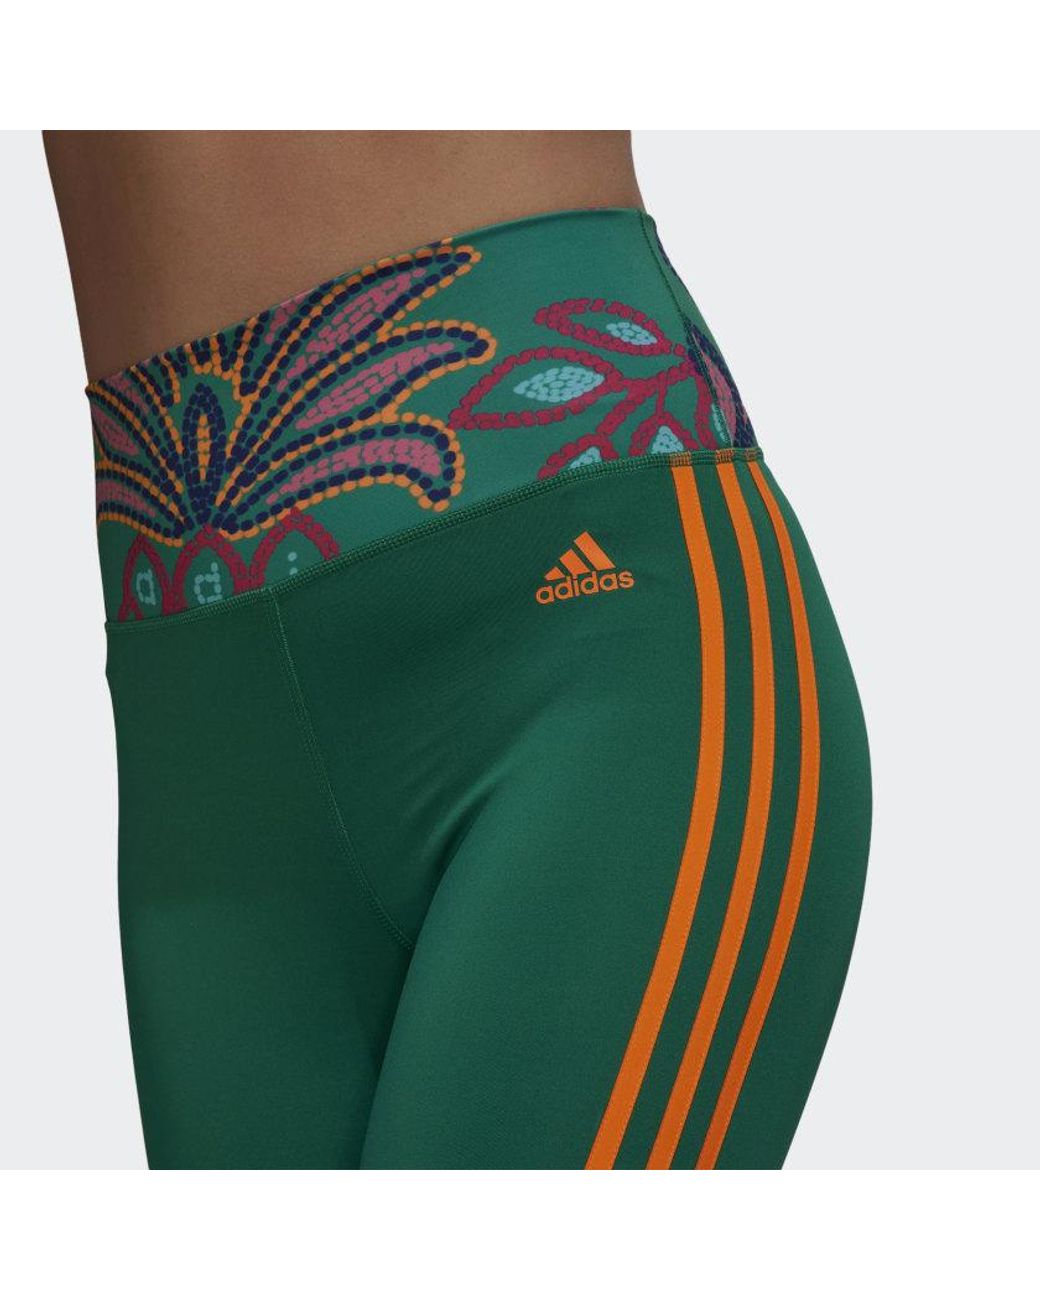 Adidas + Farm Rio Sz Large Leggings Green Aeroready Training Pants